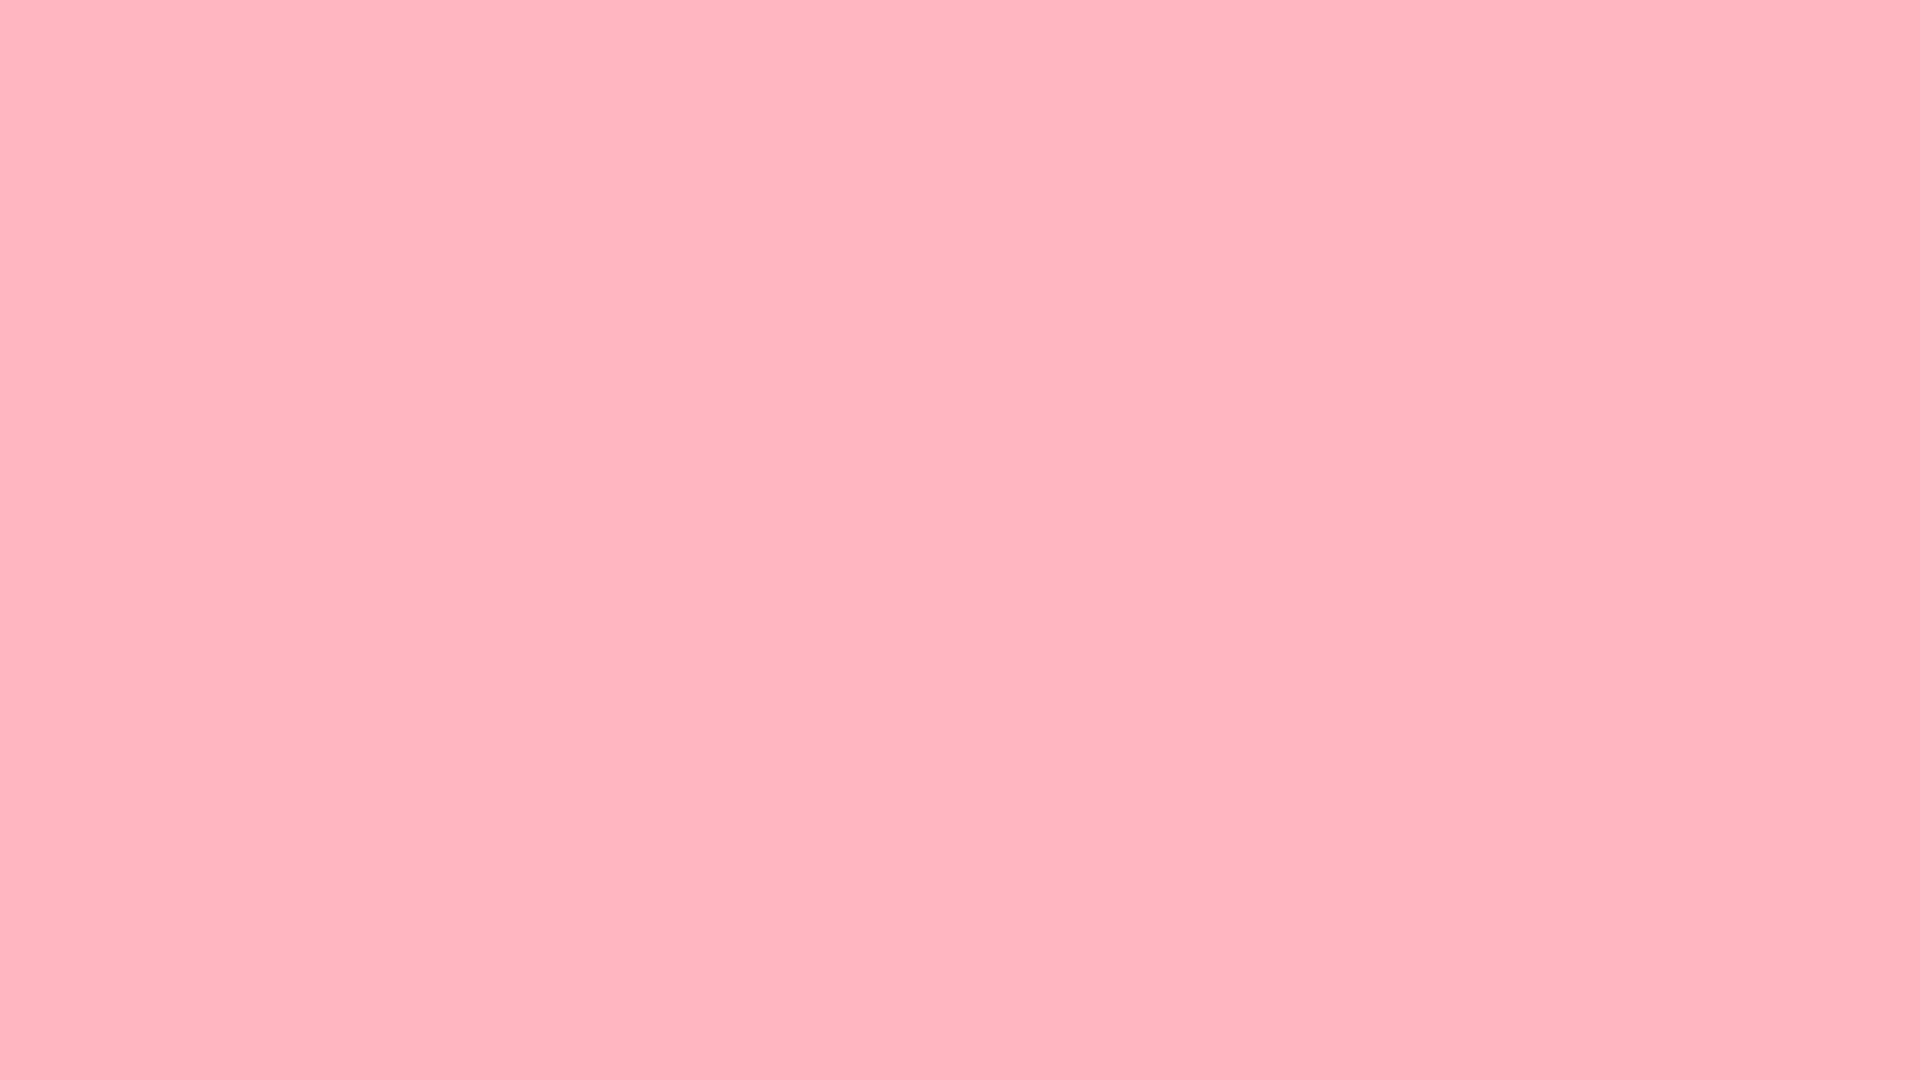 Wallpaper For > Light Pink Solid Color Background